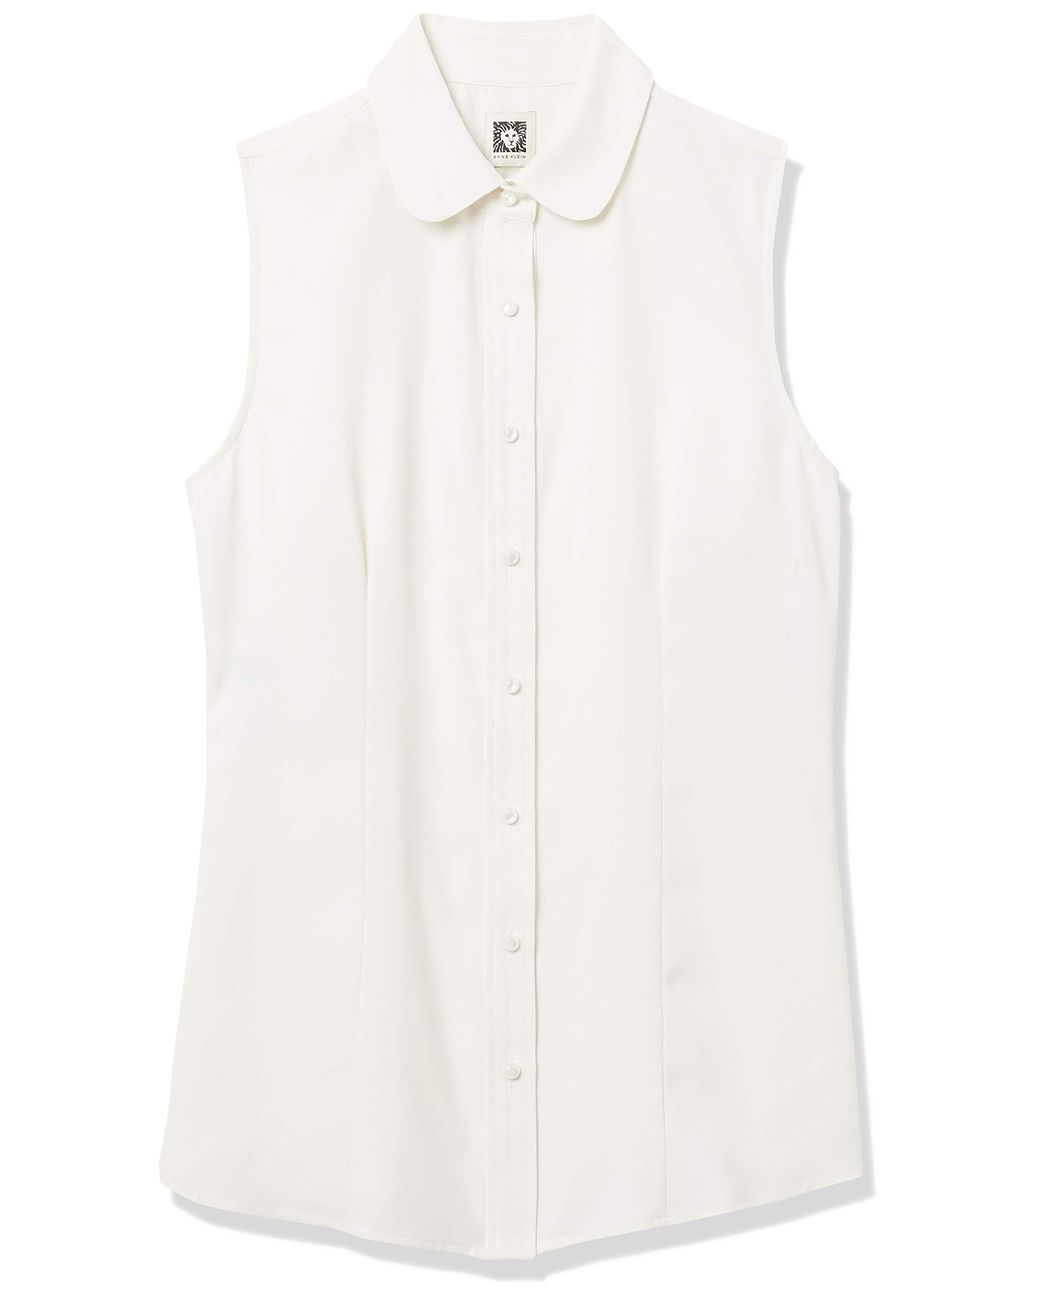 Anne Klein Sleeveless Button Front Blouse in White - Lyst